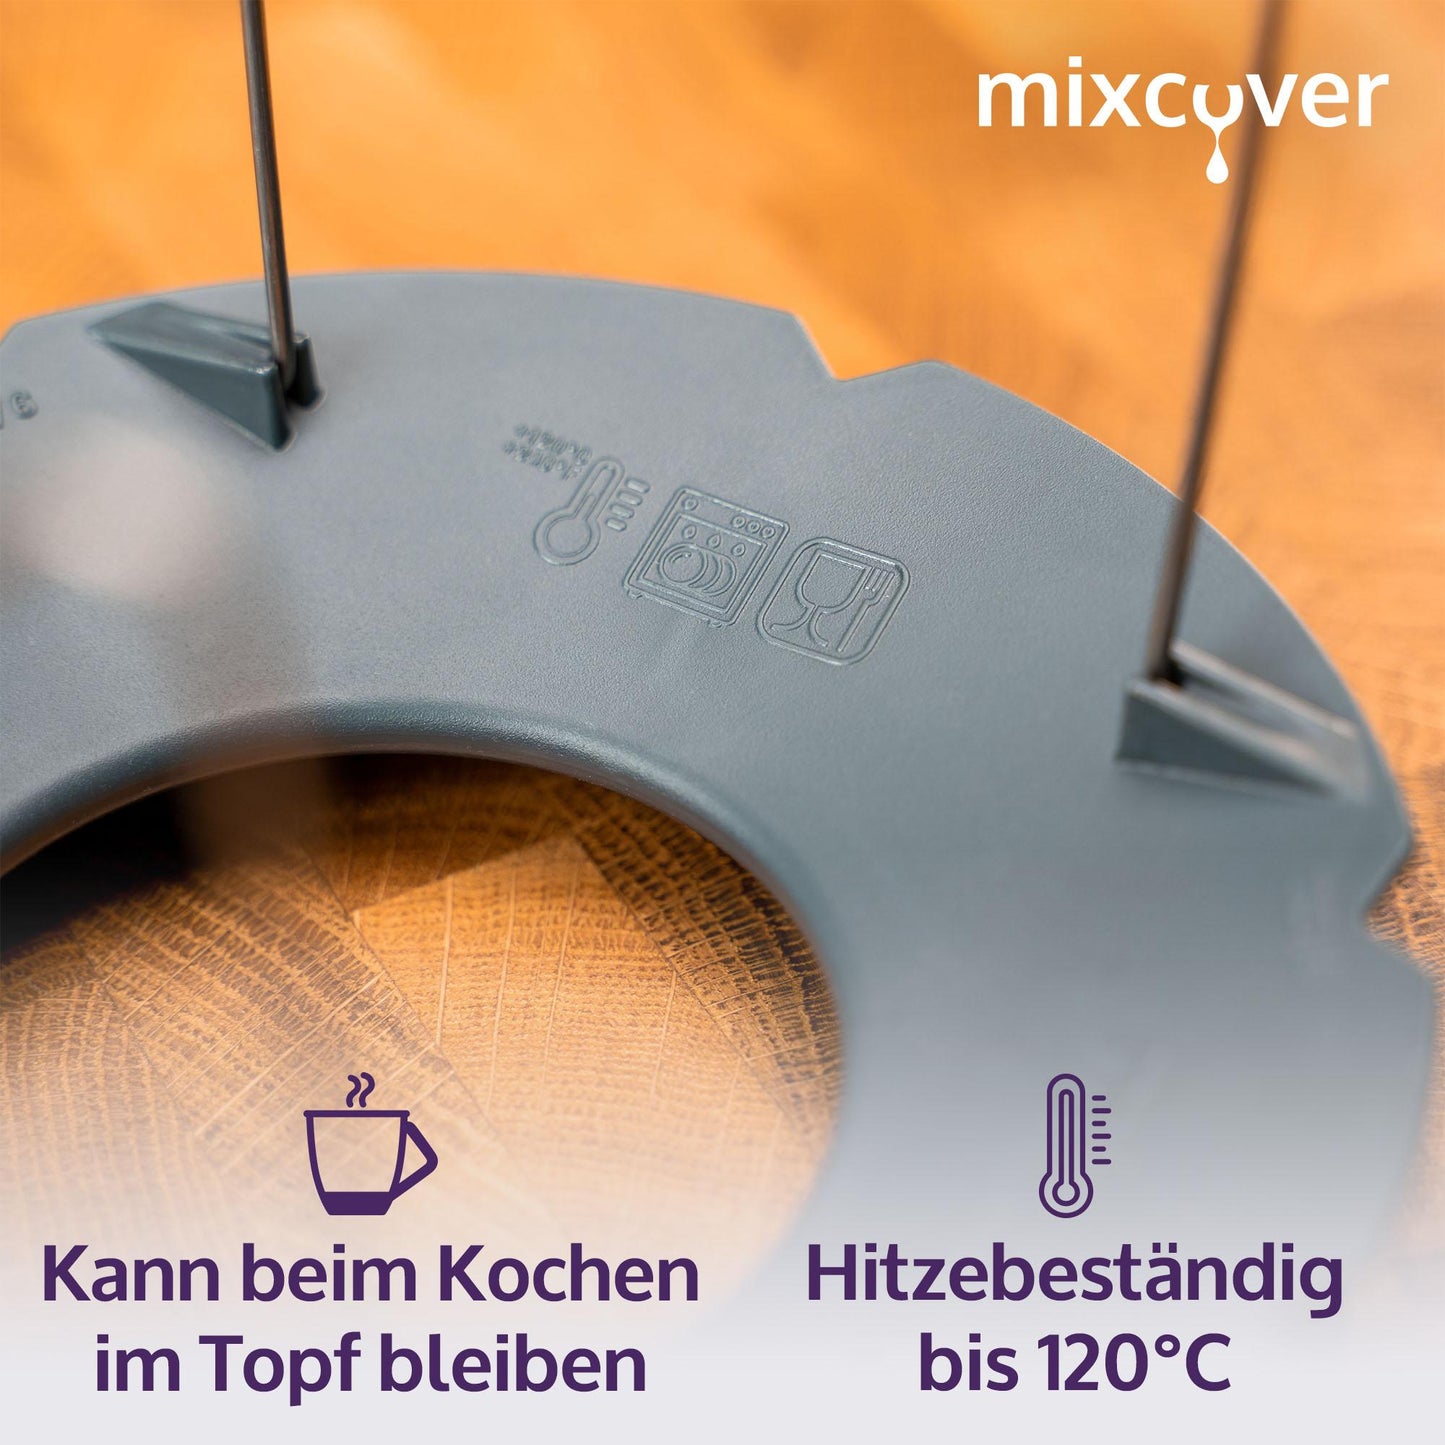 mixcover Mixtopf Verkleinerung für Monsieur Cuisine Connect MCC Häcksel Helfer, Pürieren - Mixcover - Mixcover